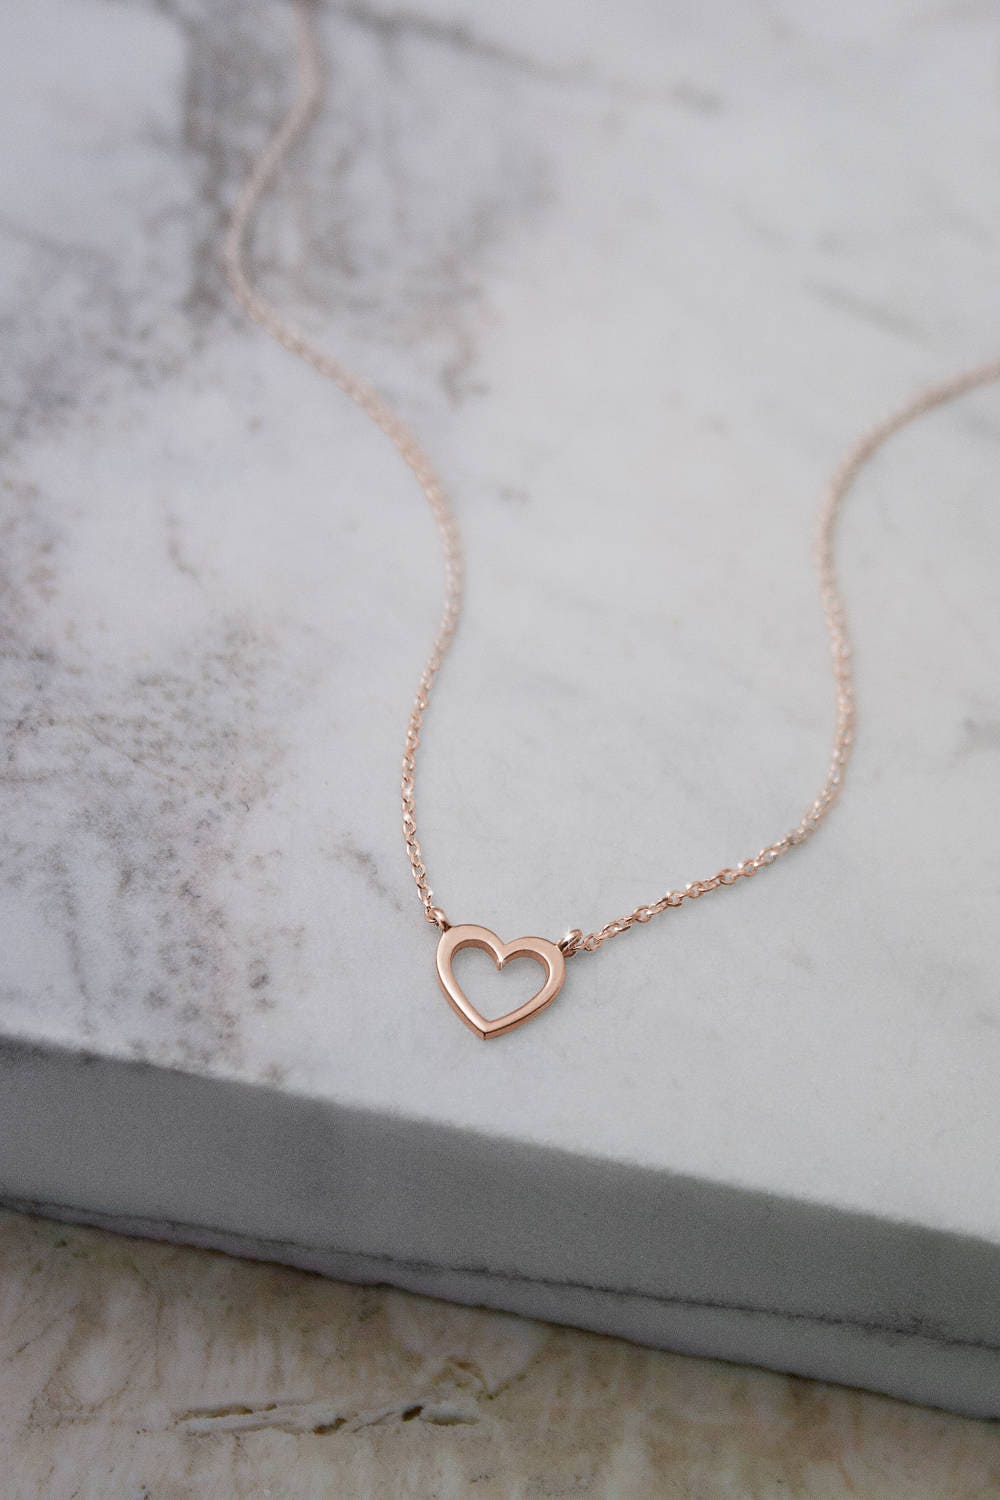 Small Gold Heart Charm Necklace Romantic Heart Pendant 9K | Etsy